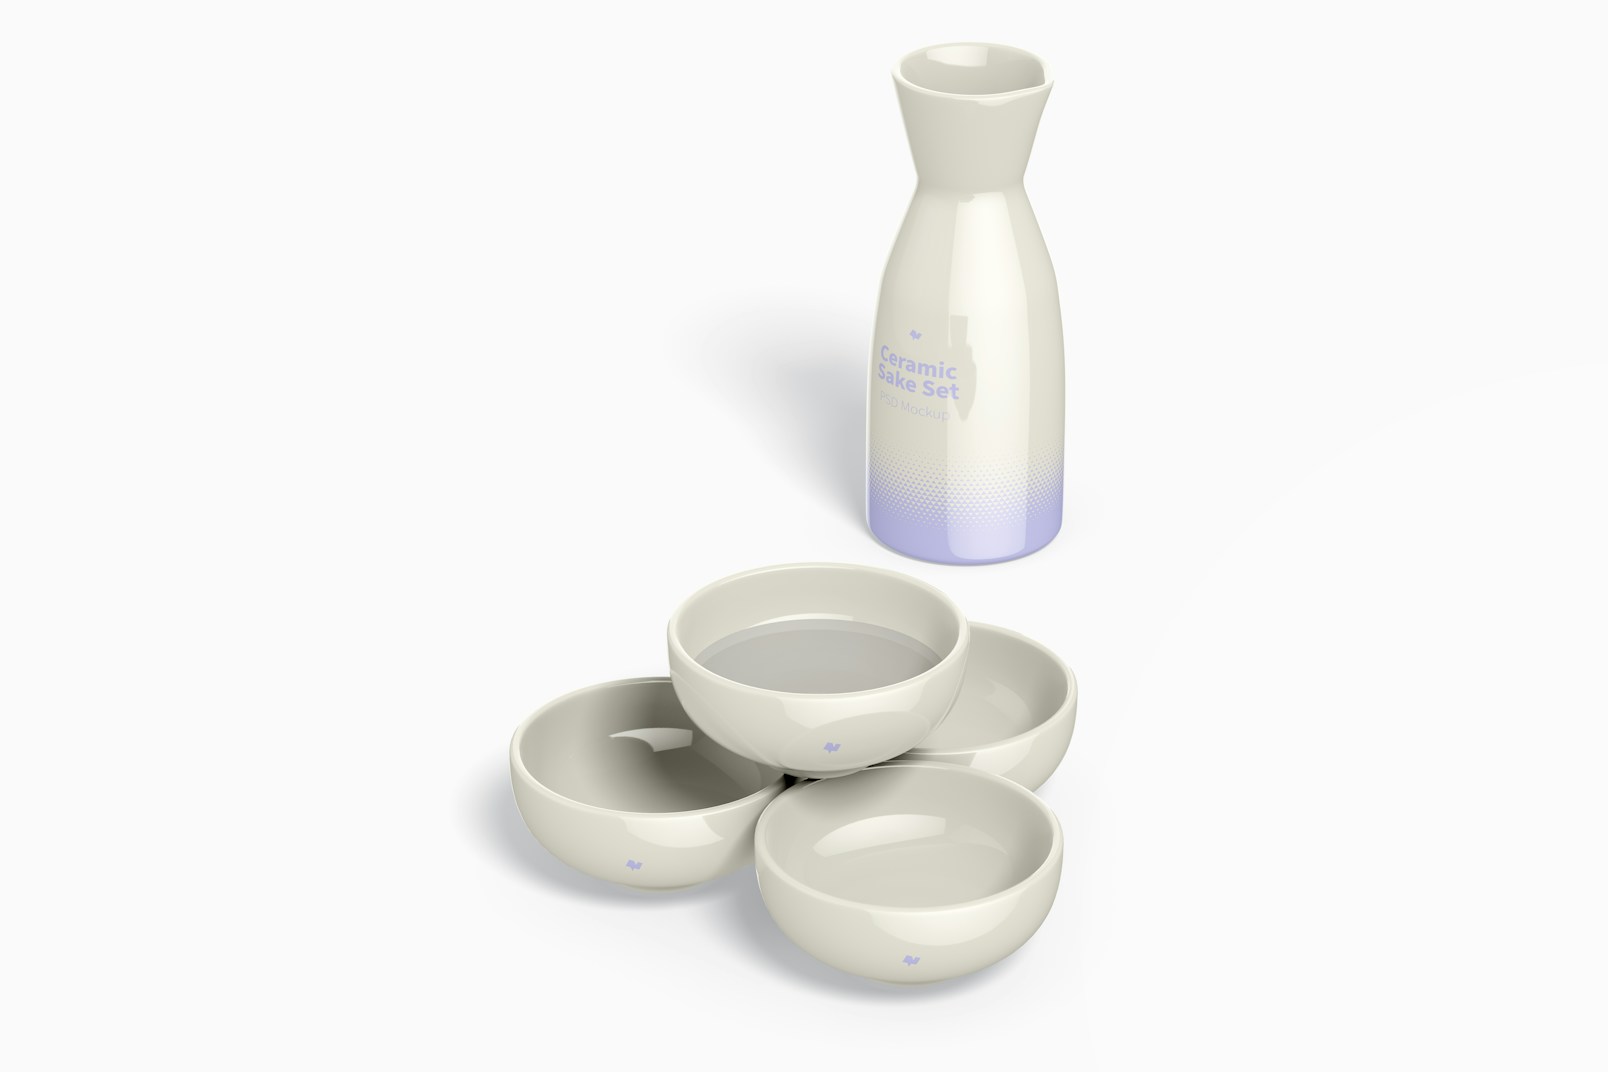 Ceramic Sake Set Mockup, Perspective